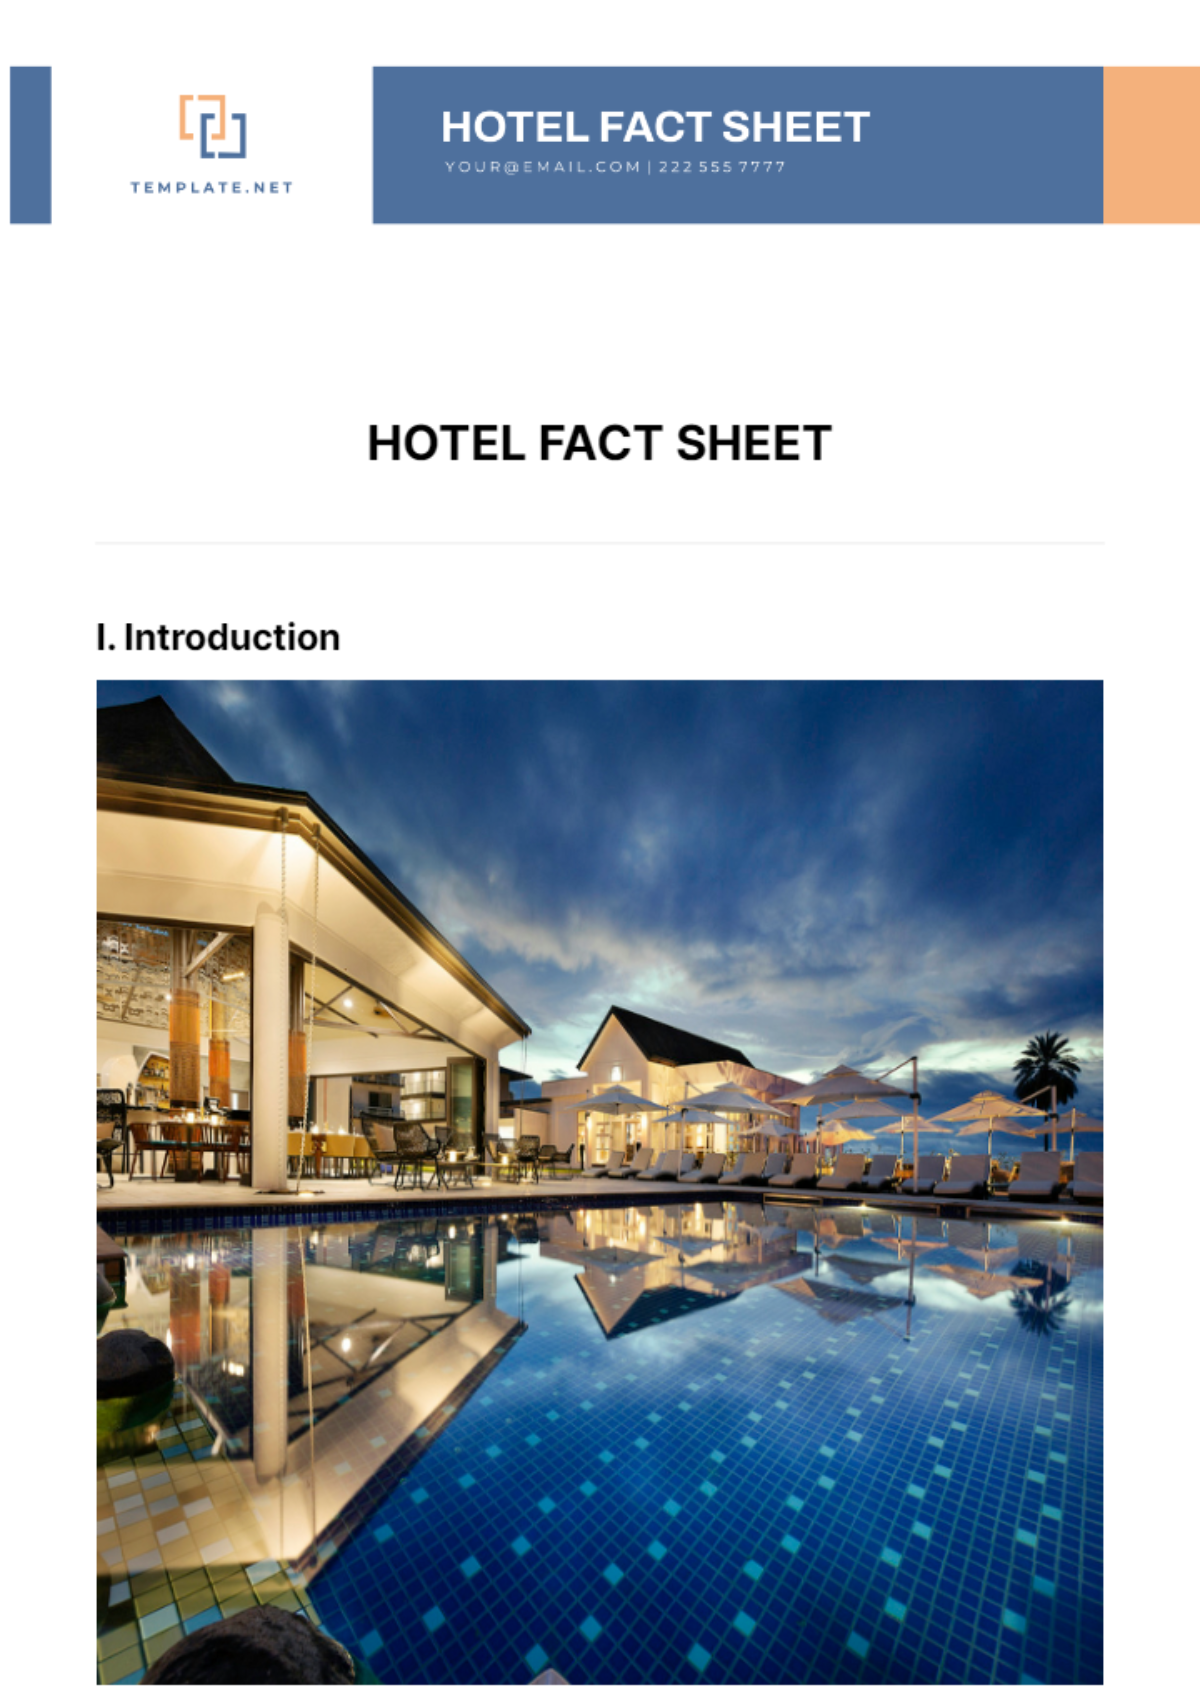 Free Hotel Fact Sheet Template